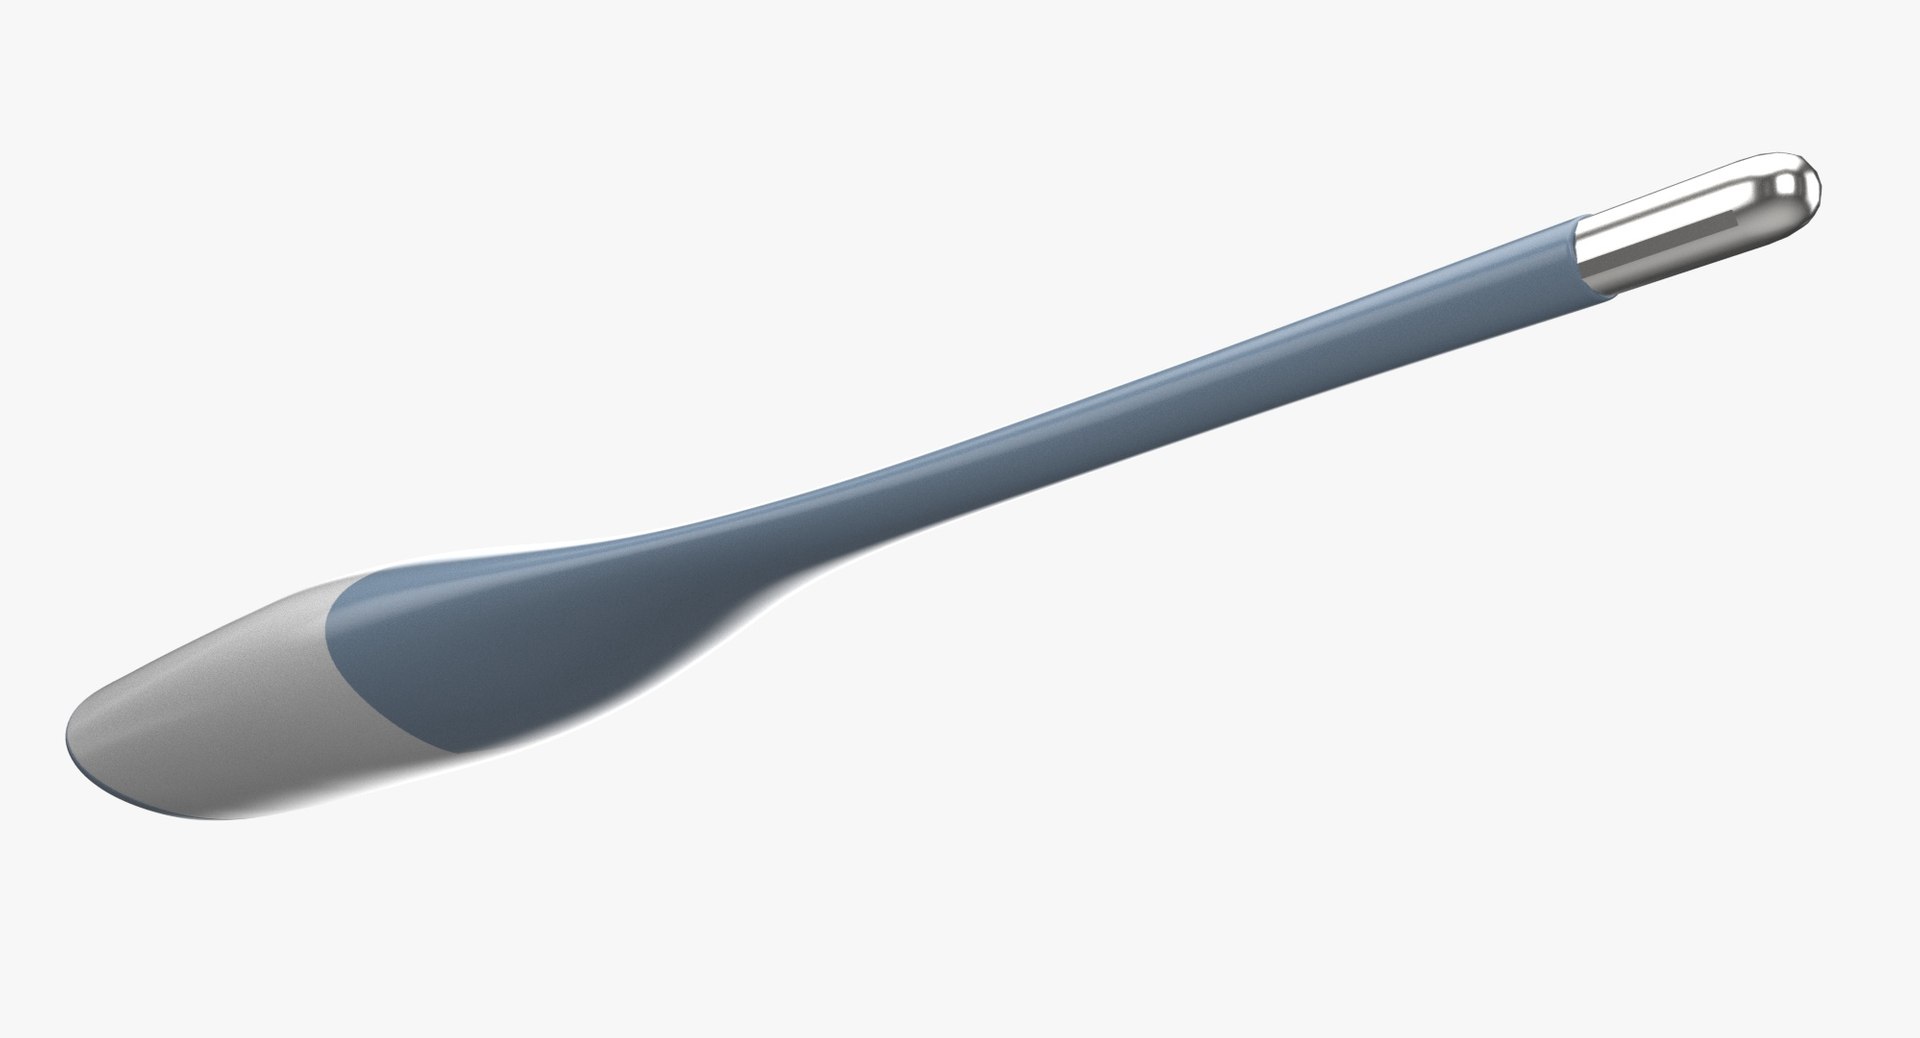 Realistic Digital Thermometer 3D Model - TurboSquid 1571904